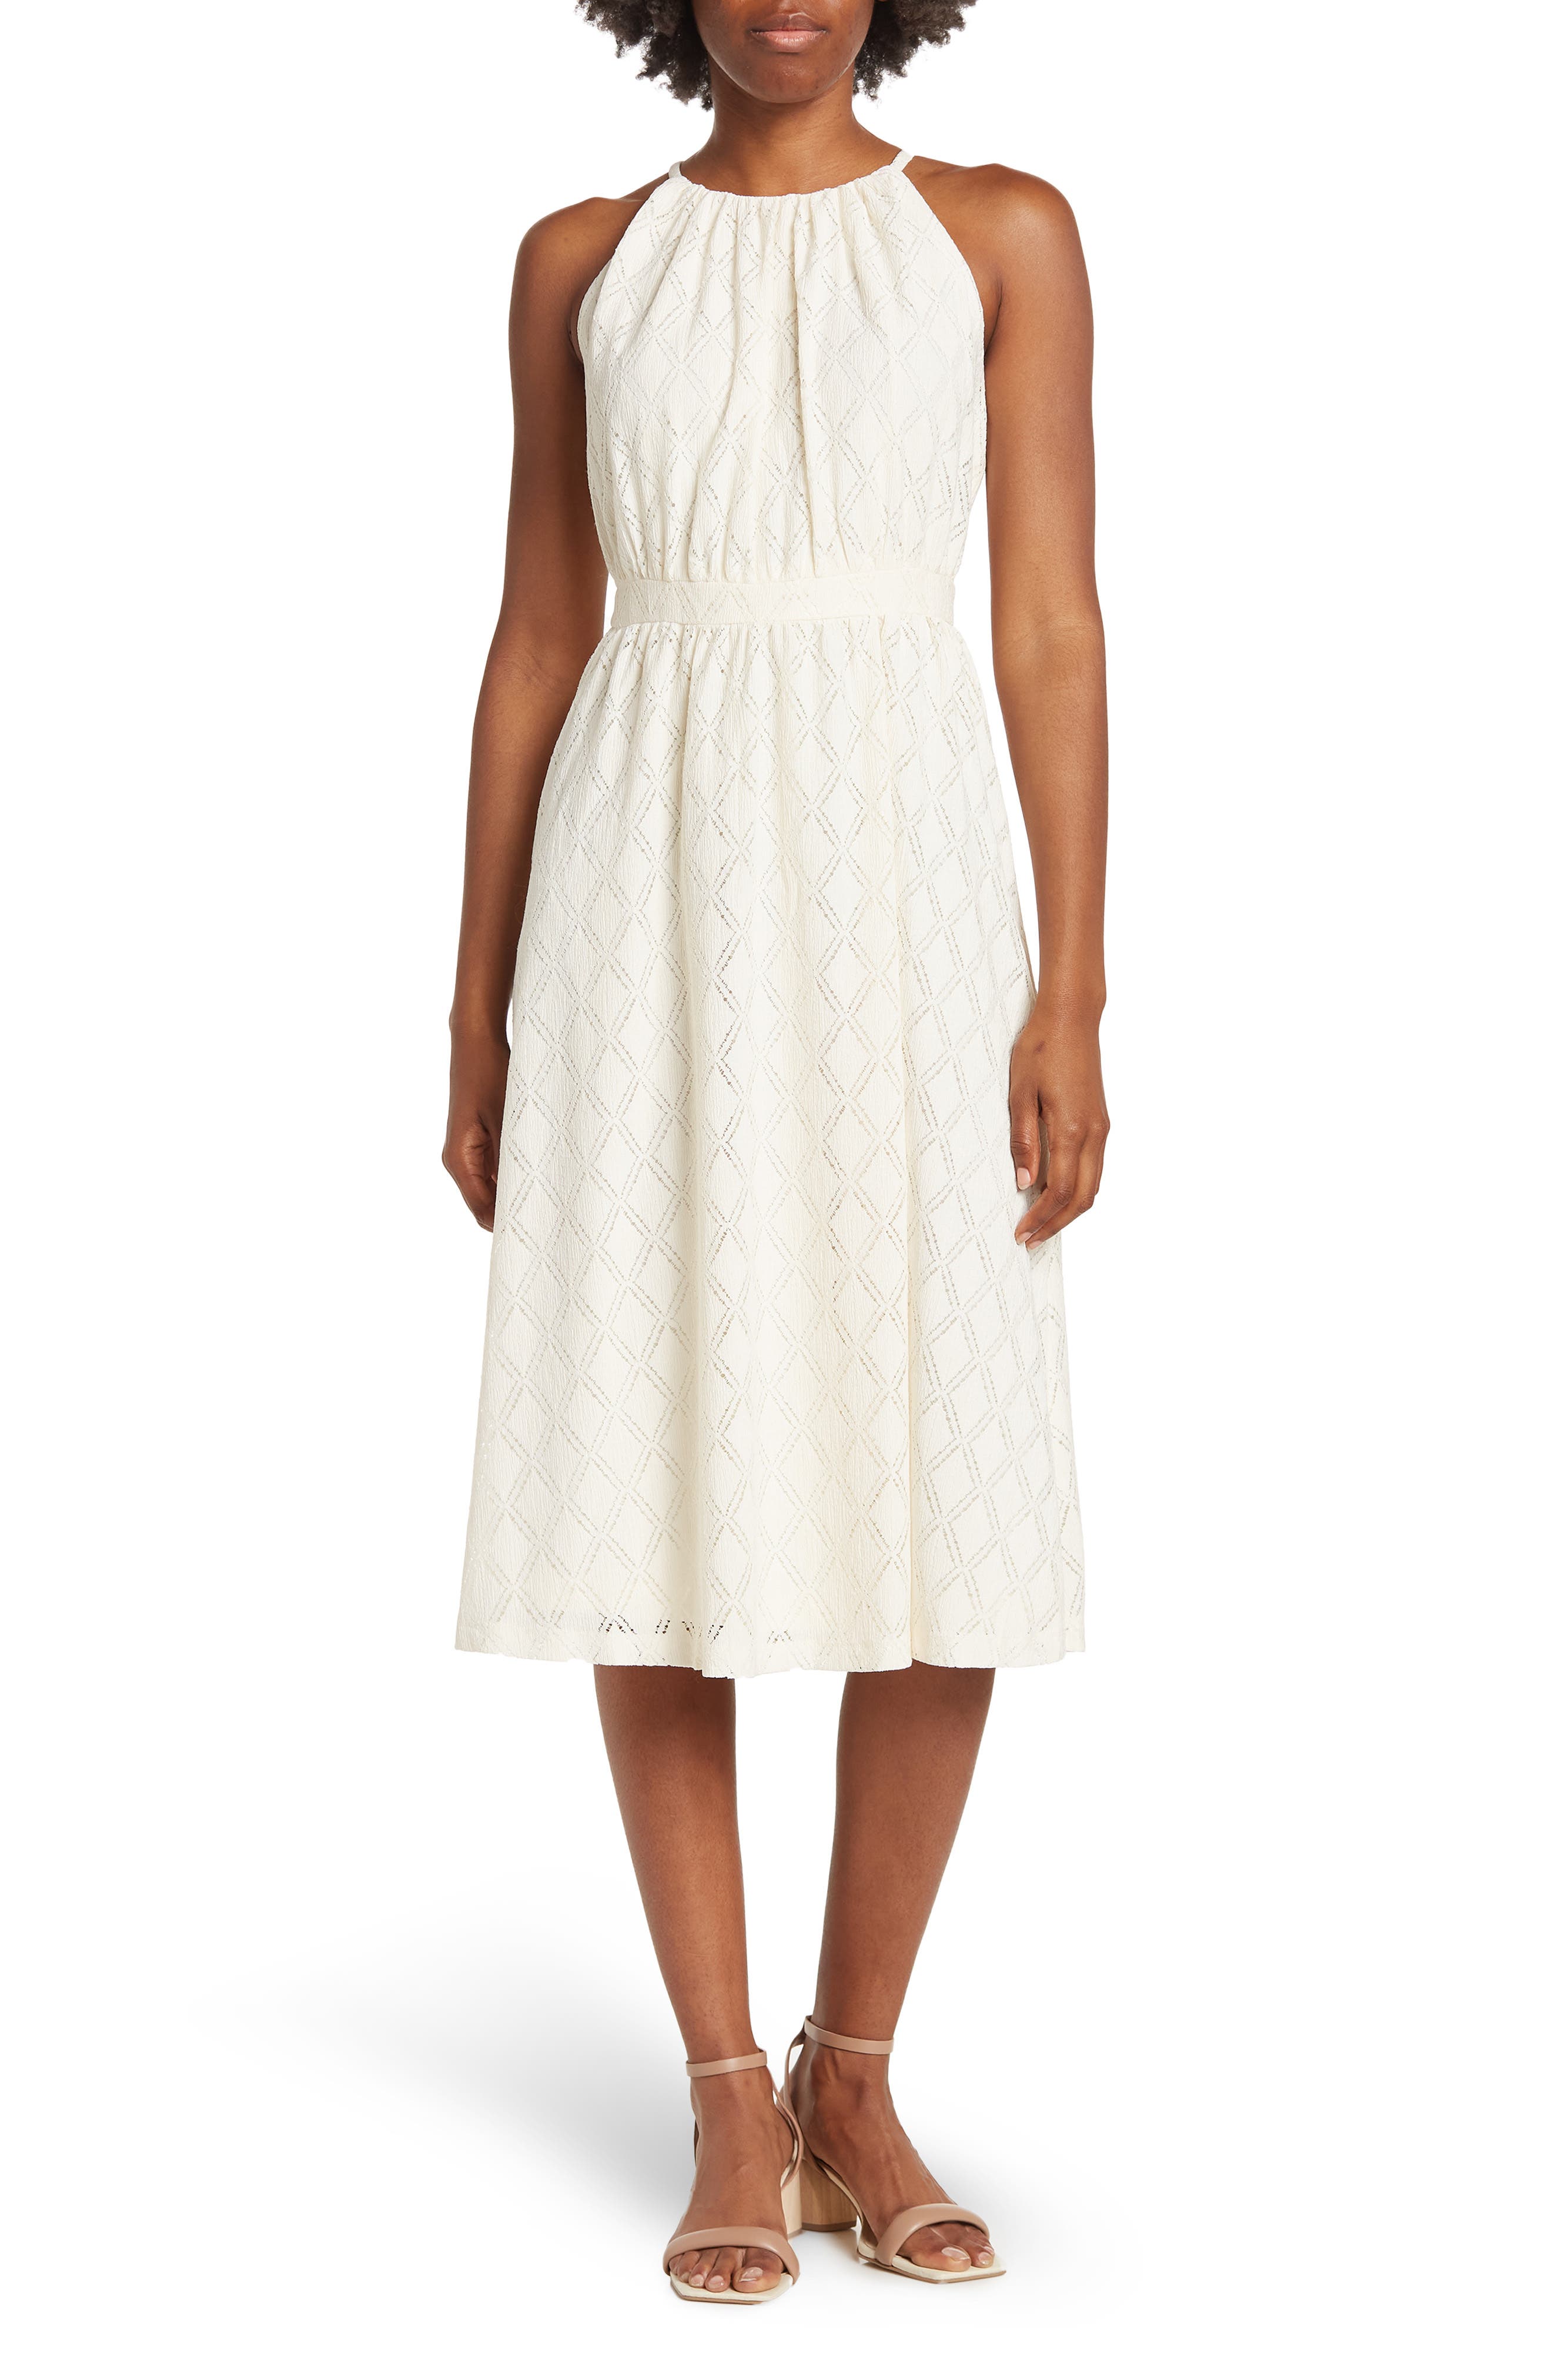 White Lace Dresses | Nordstrom Rack